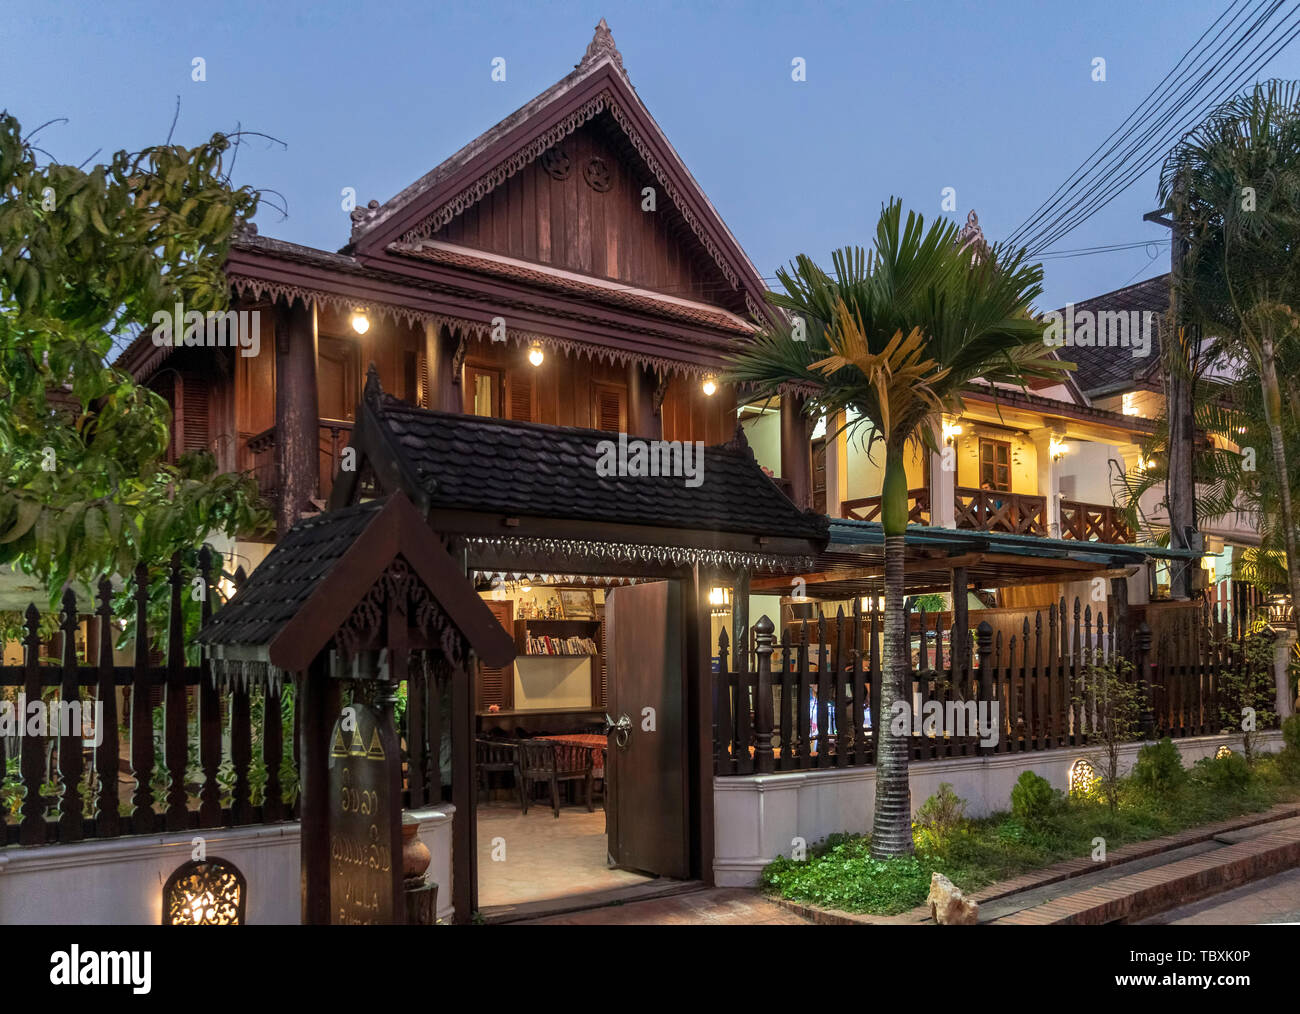 Architettura coloniale in una strada laterale a Luang Prabang, Laos Foto Stock